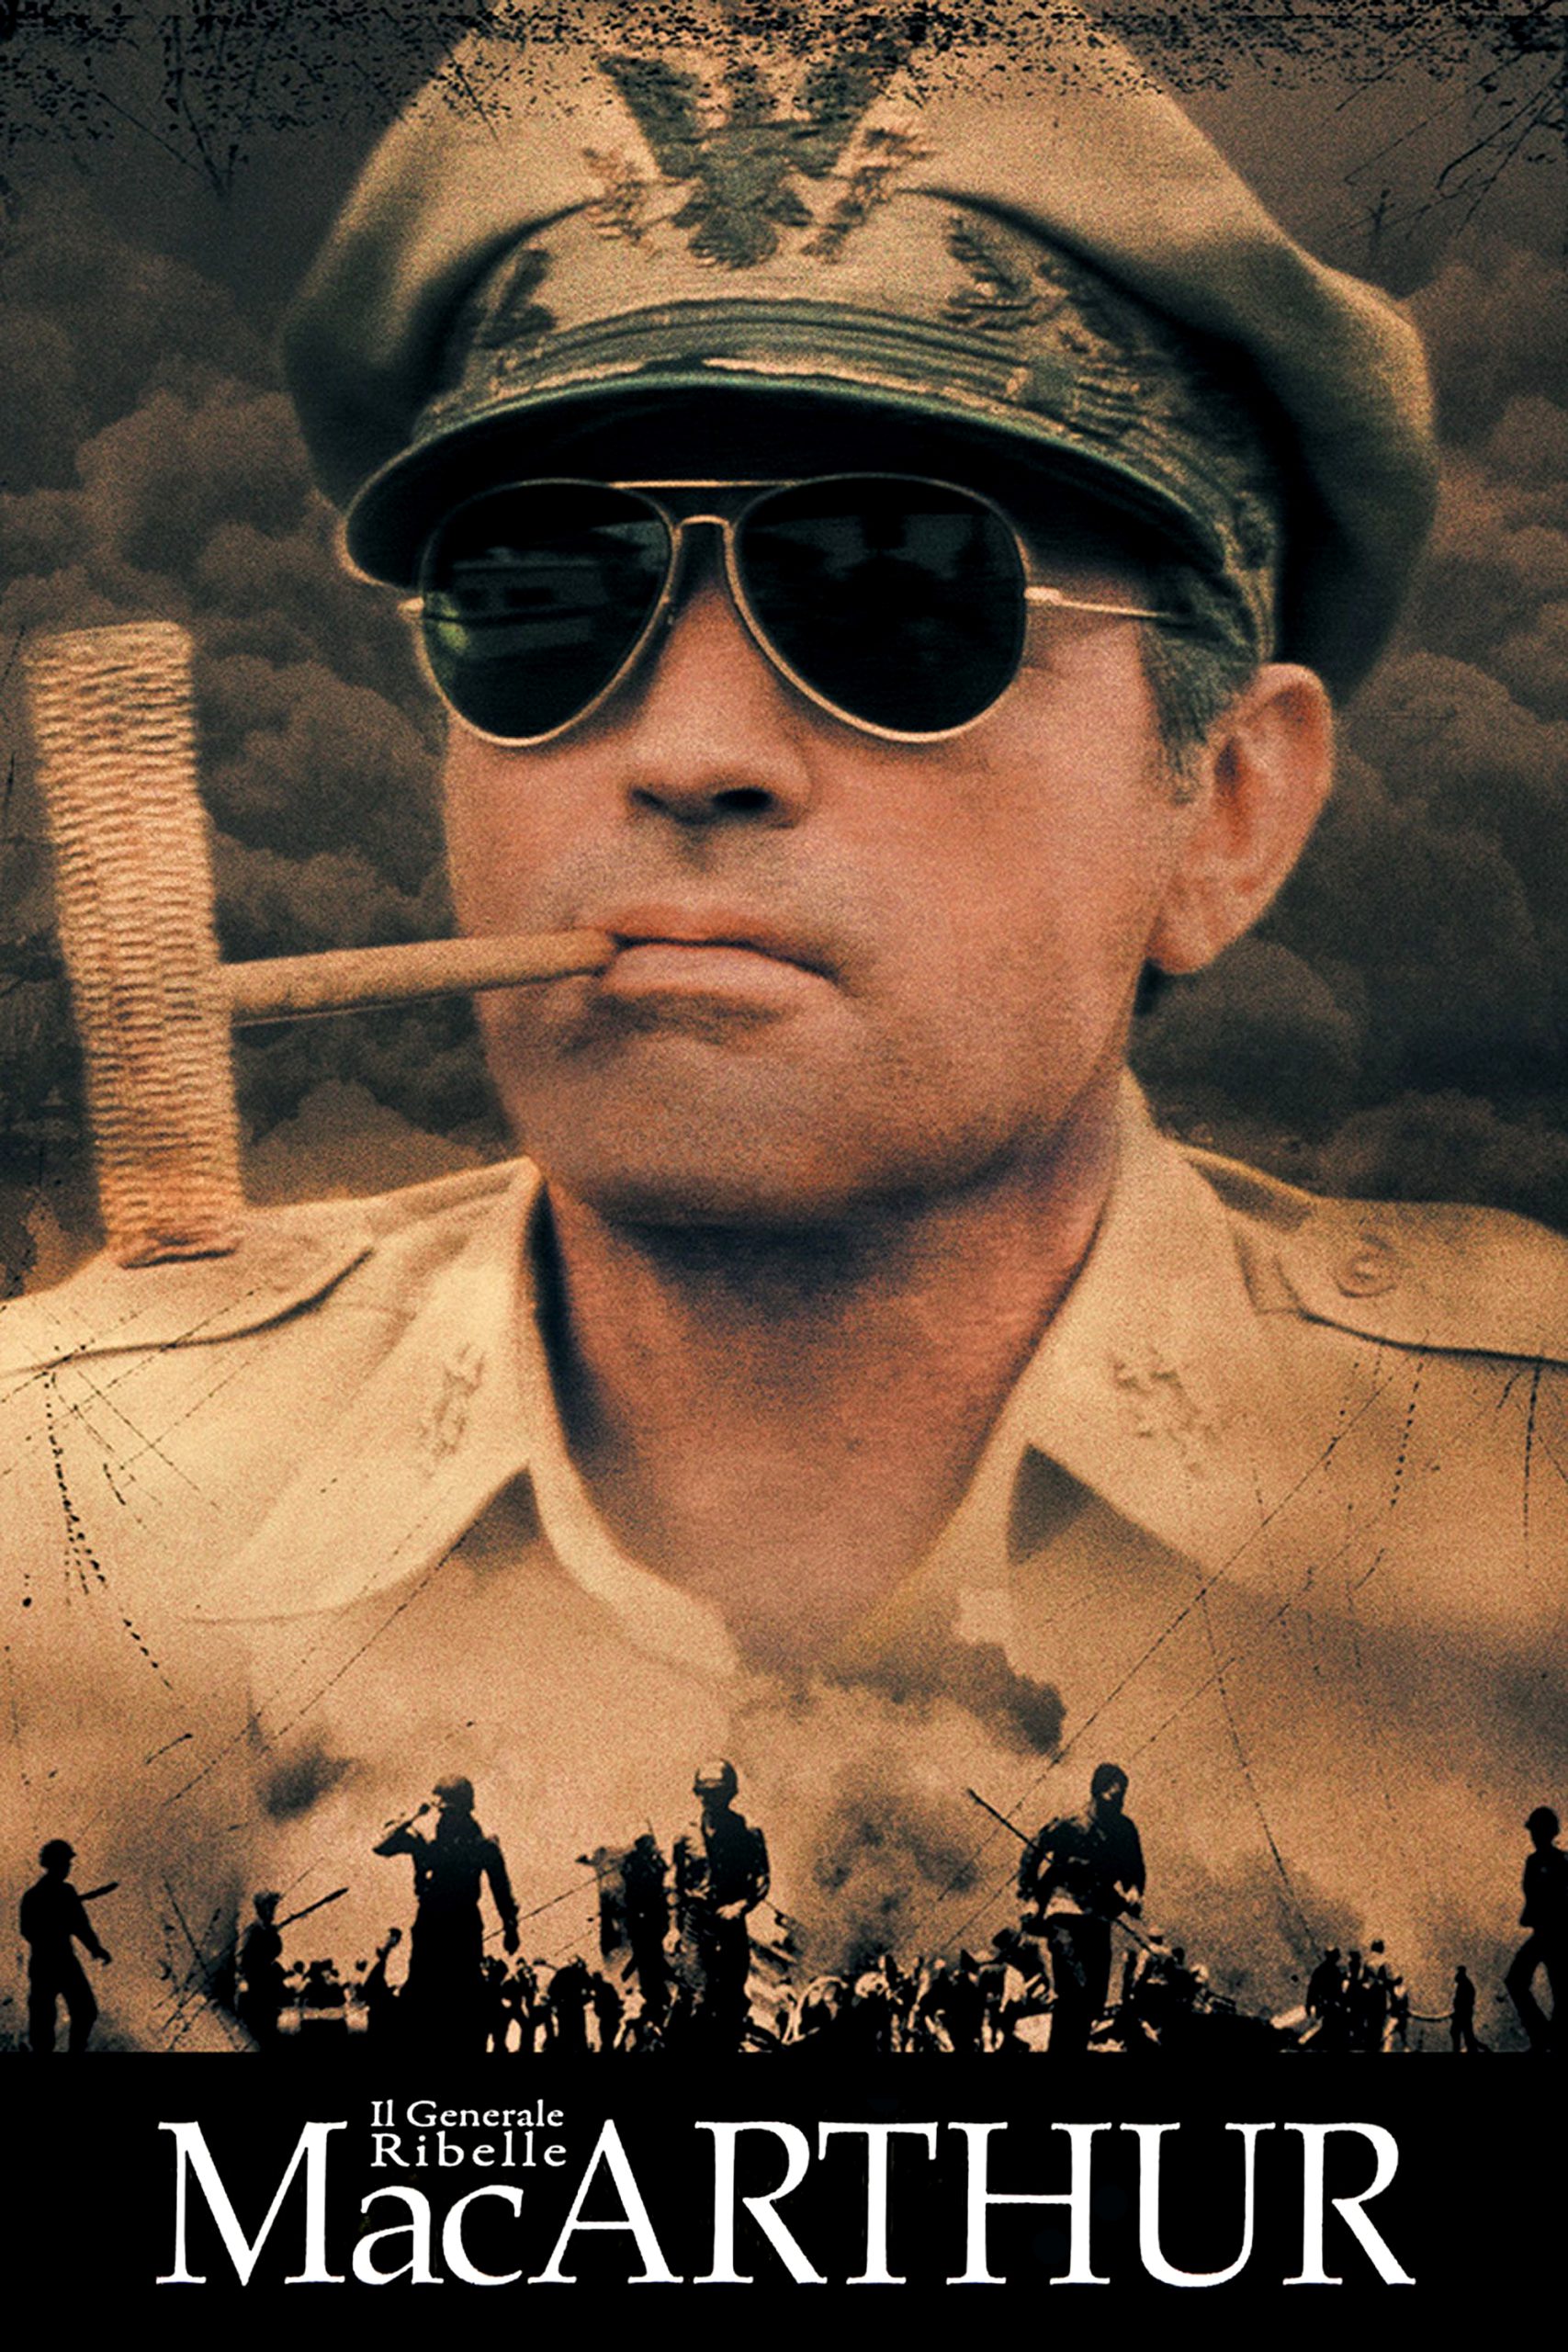 MacArthur il generale ribelle [HD] (1977)